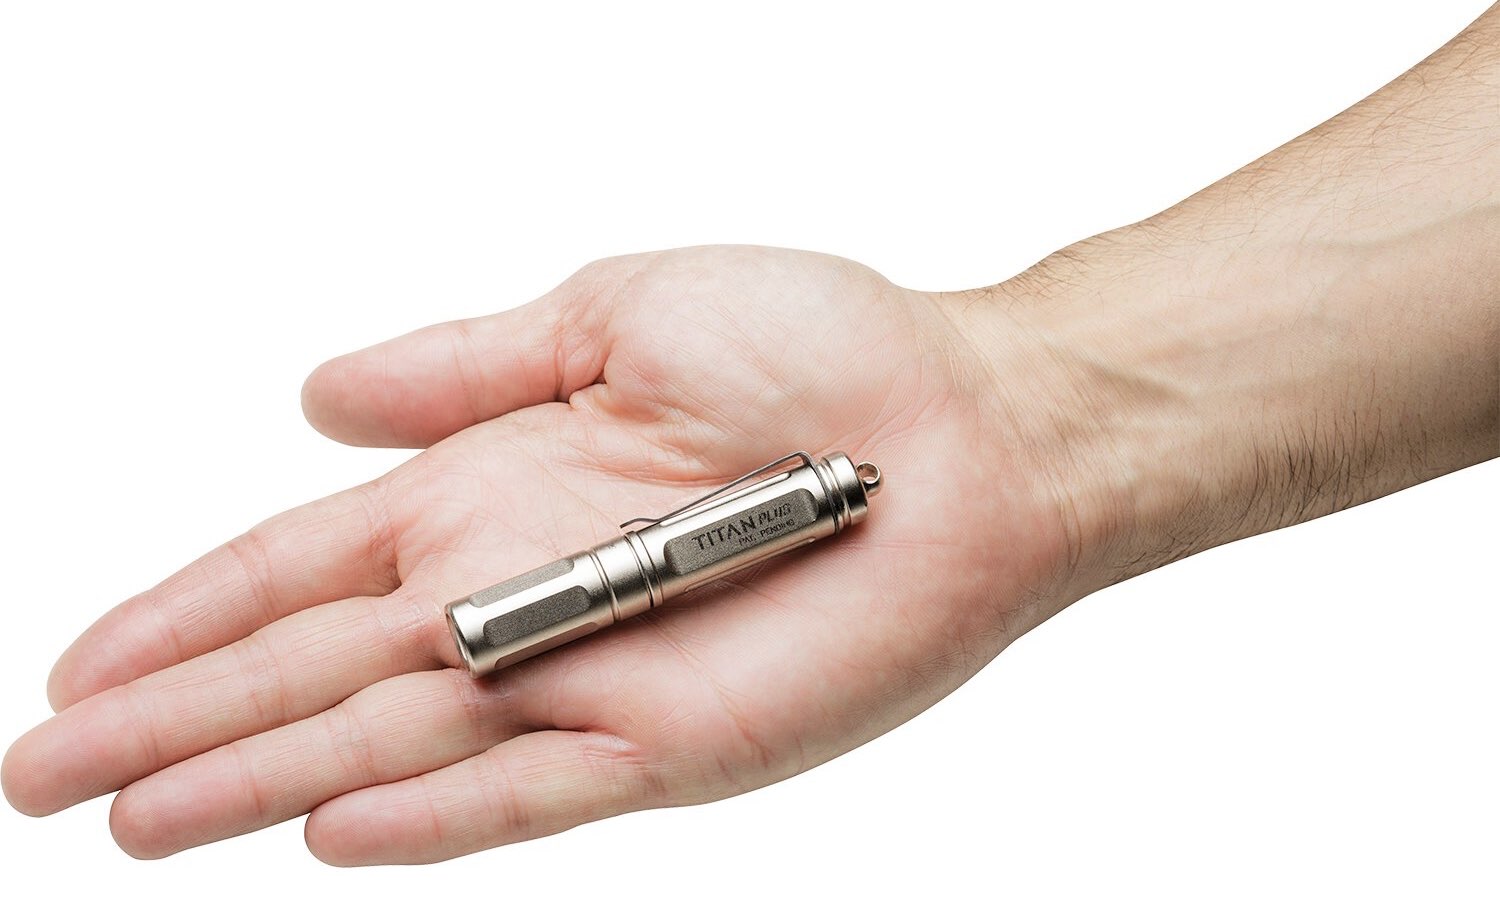 surefire-titan-plus-led-keychain-flashlight-in-hand